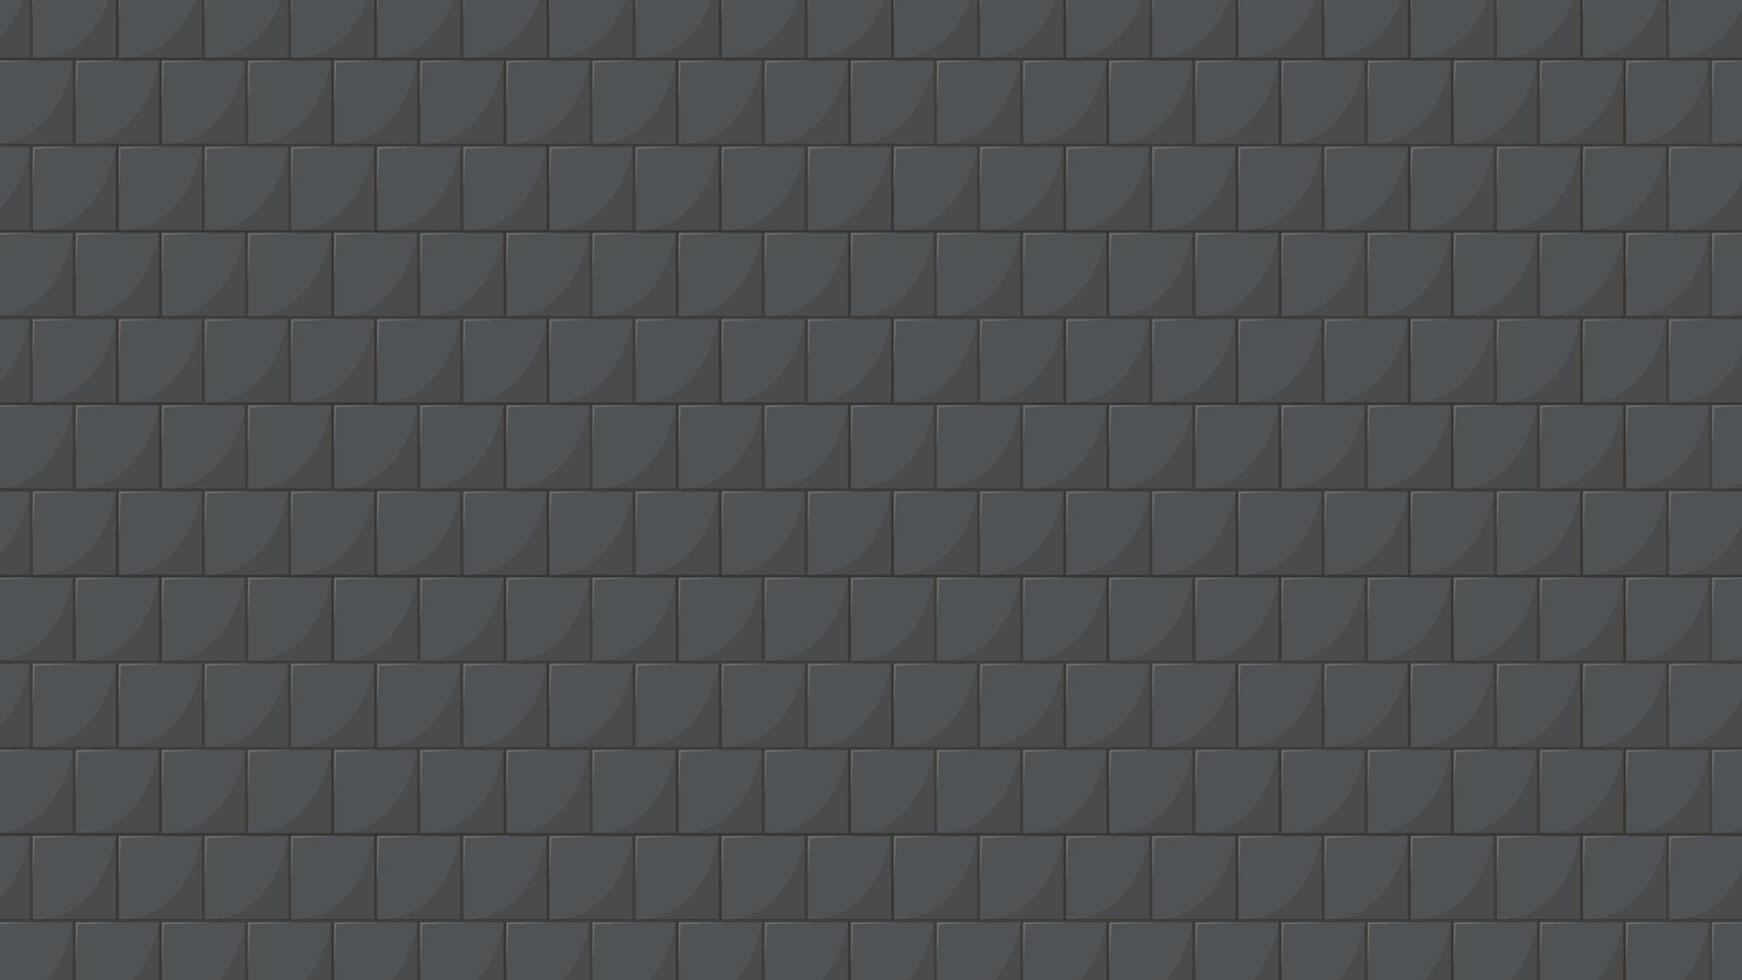 Brick pattern wallpaper. Brick wall background. black brick wallpaper. vector